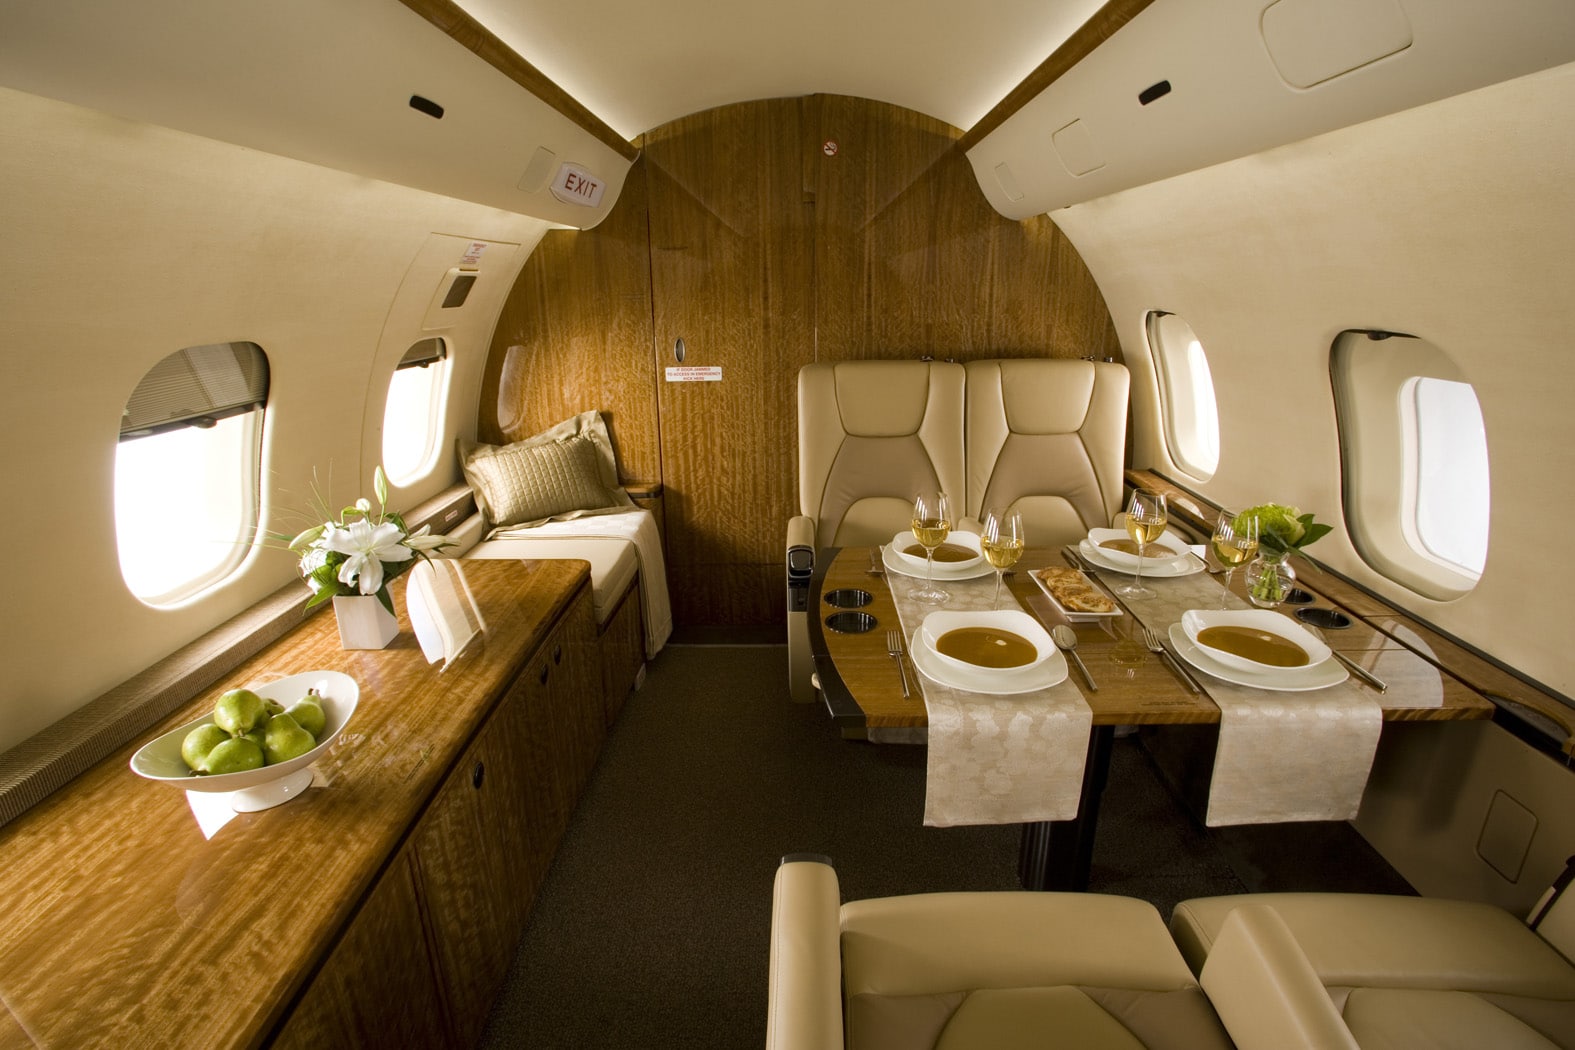 World's second-richest man Bernard Arnault sells private jet to